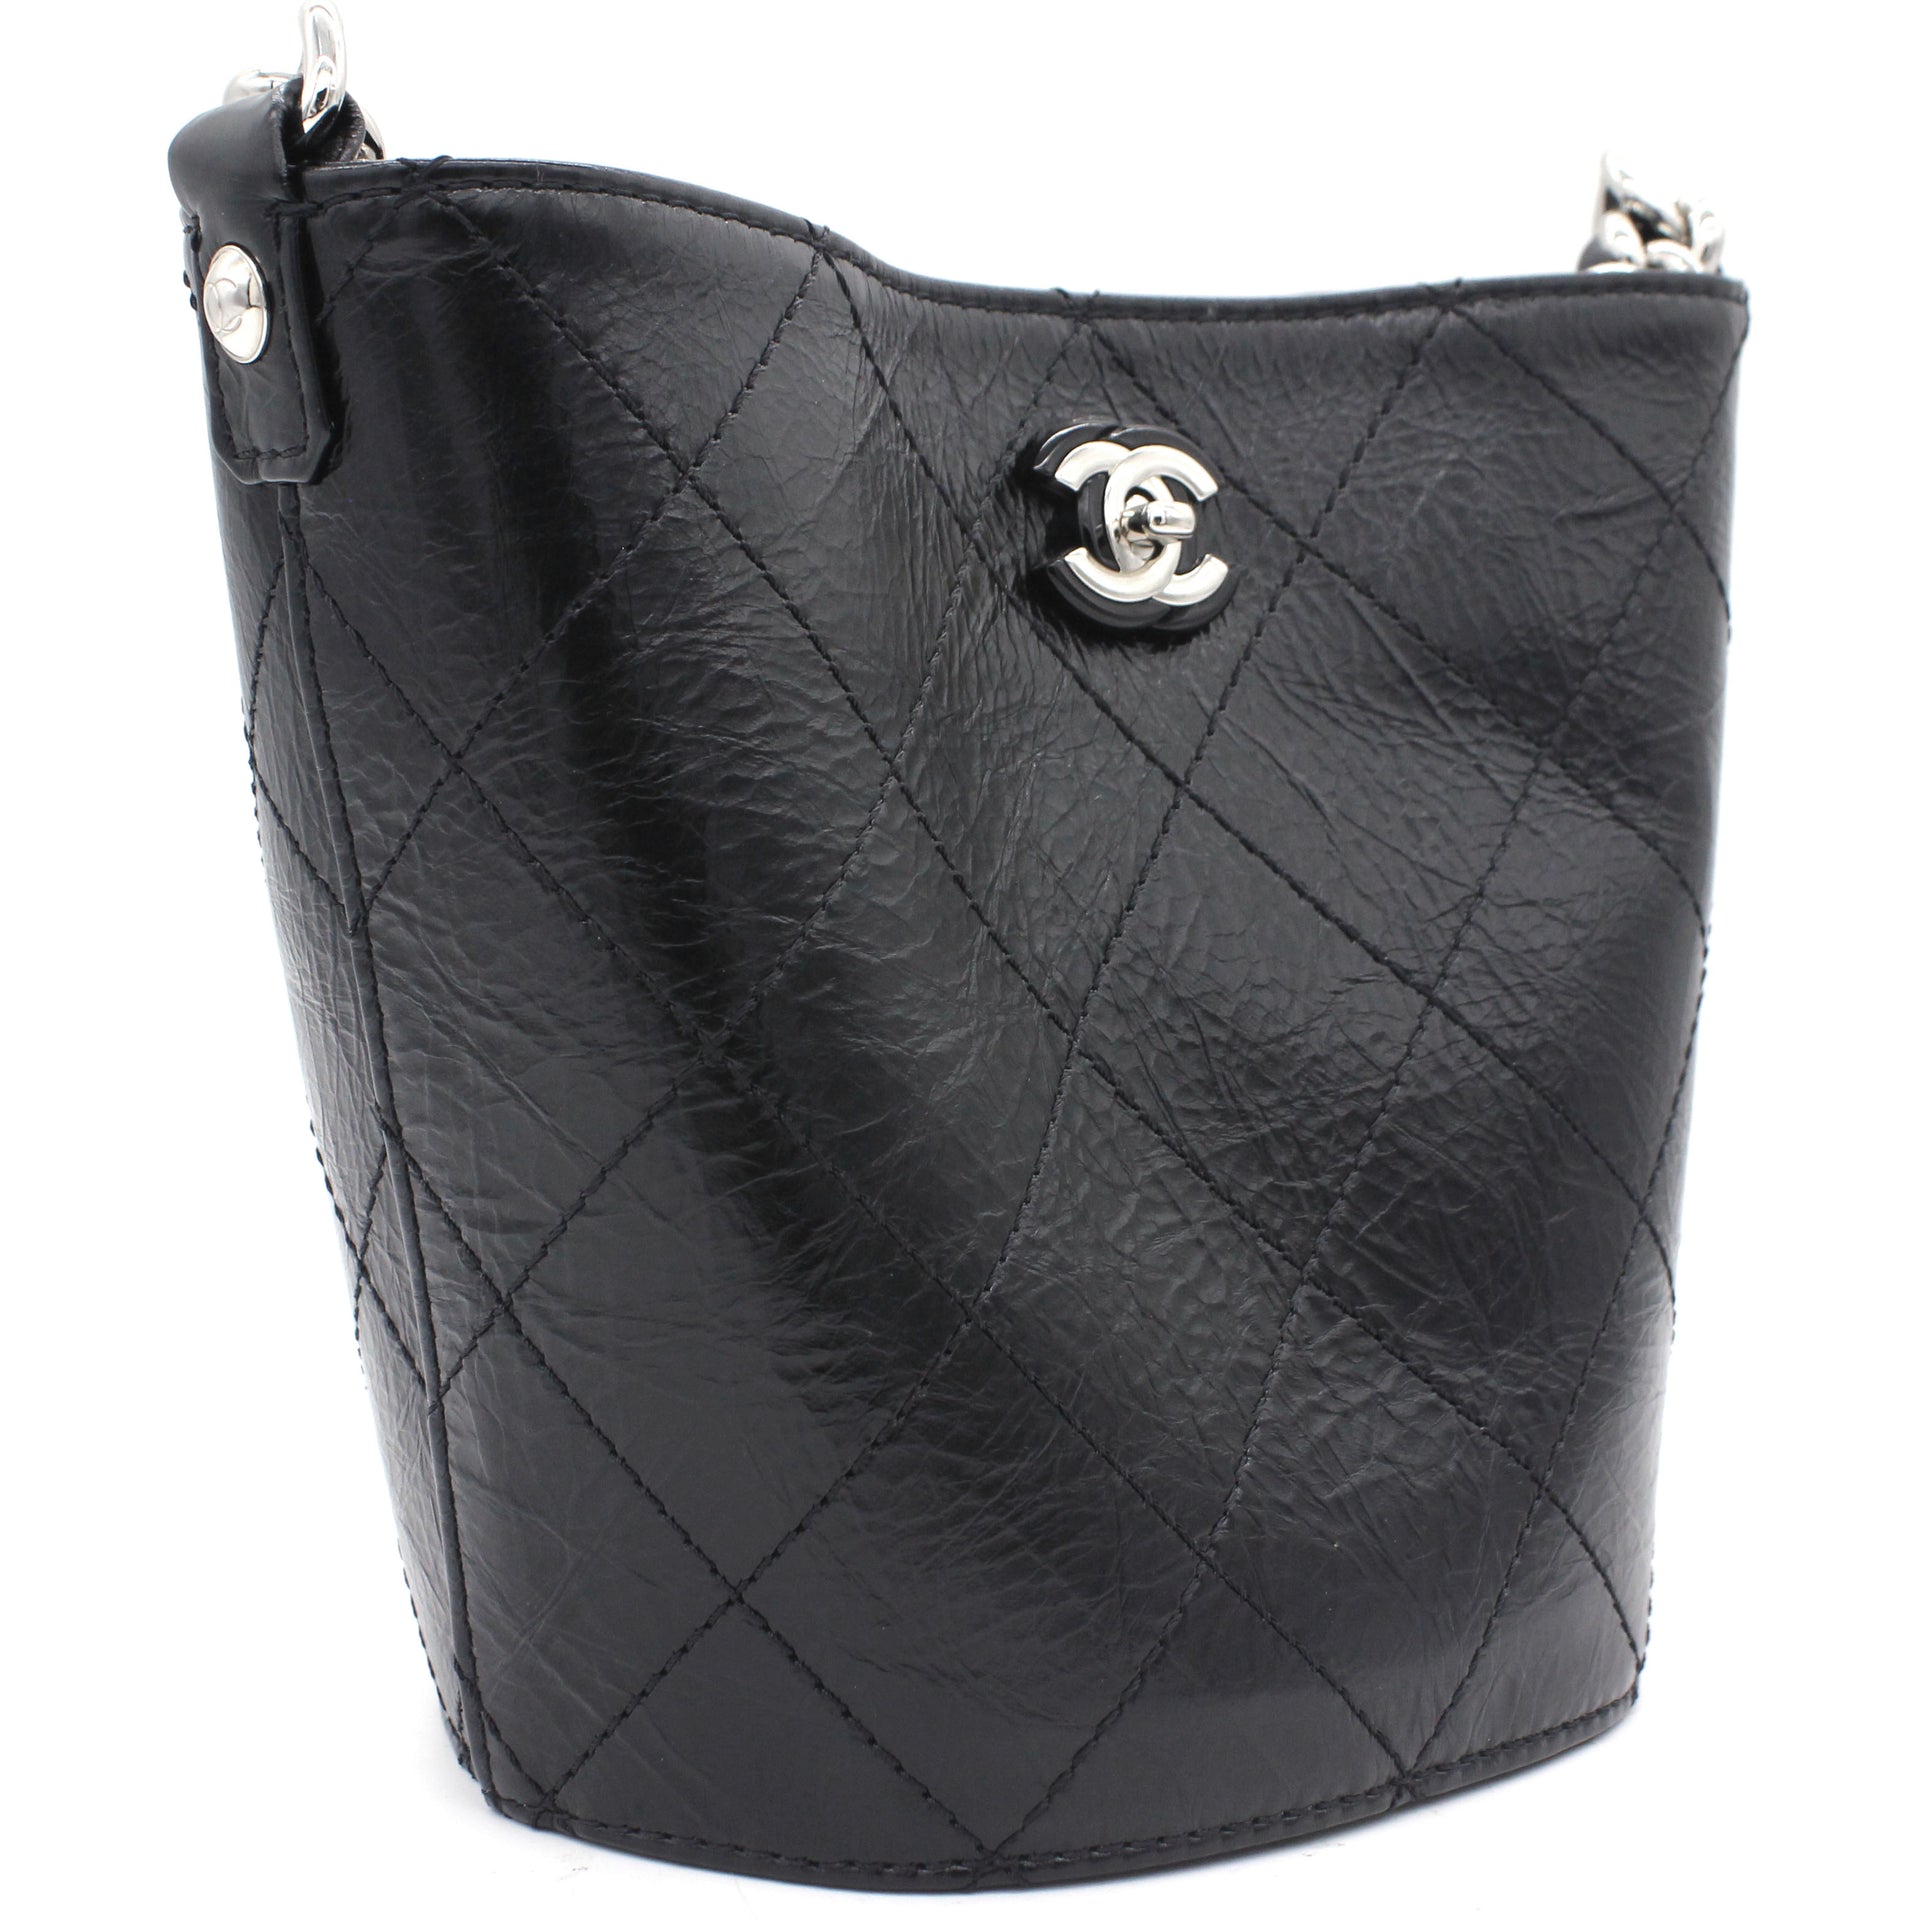 Leather Small Calfskin Bucket Bag